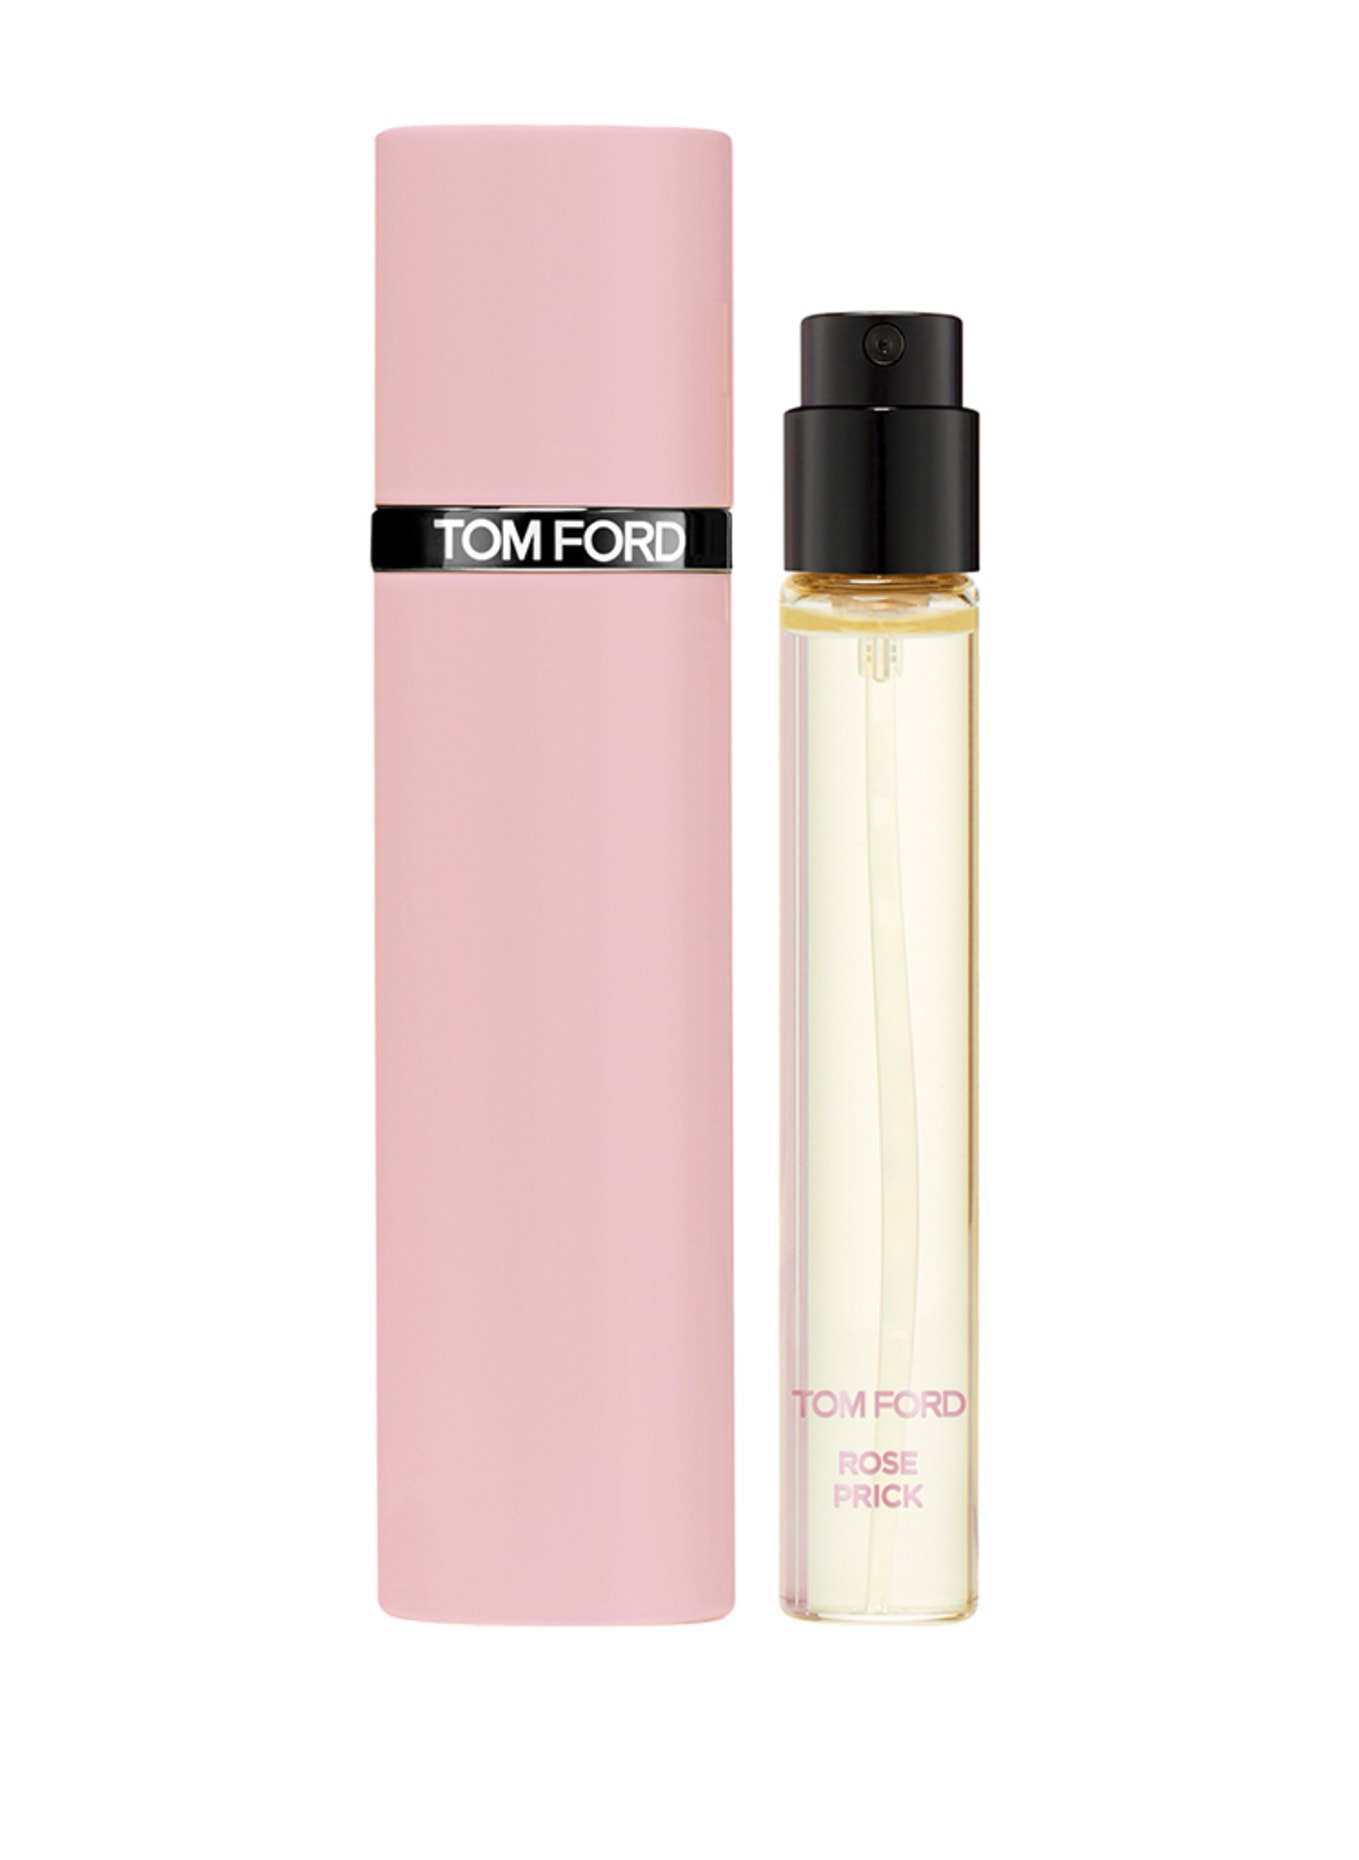 TOM FORD BEAUTY ROSE PRICK ATOMIZER (Bild 1)